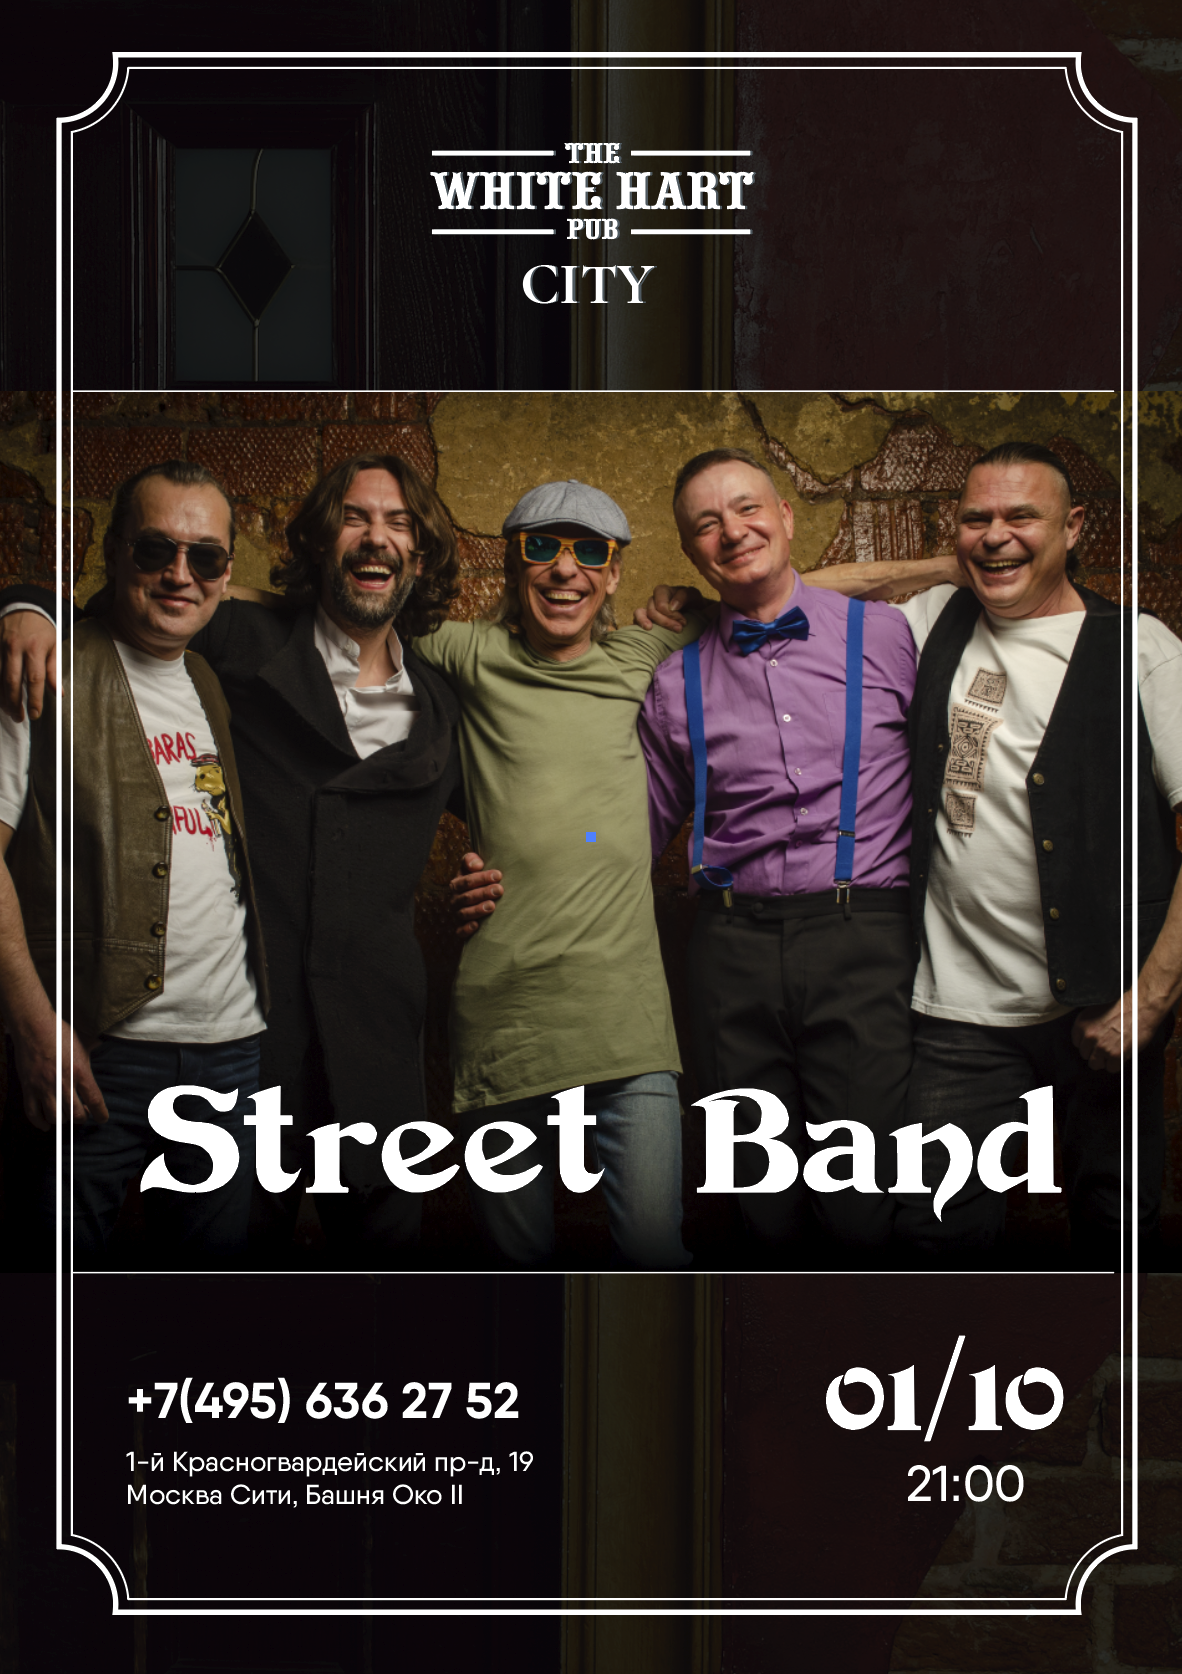 Афиша! 01 октября — Street Band в White Hart Pub Moscow City